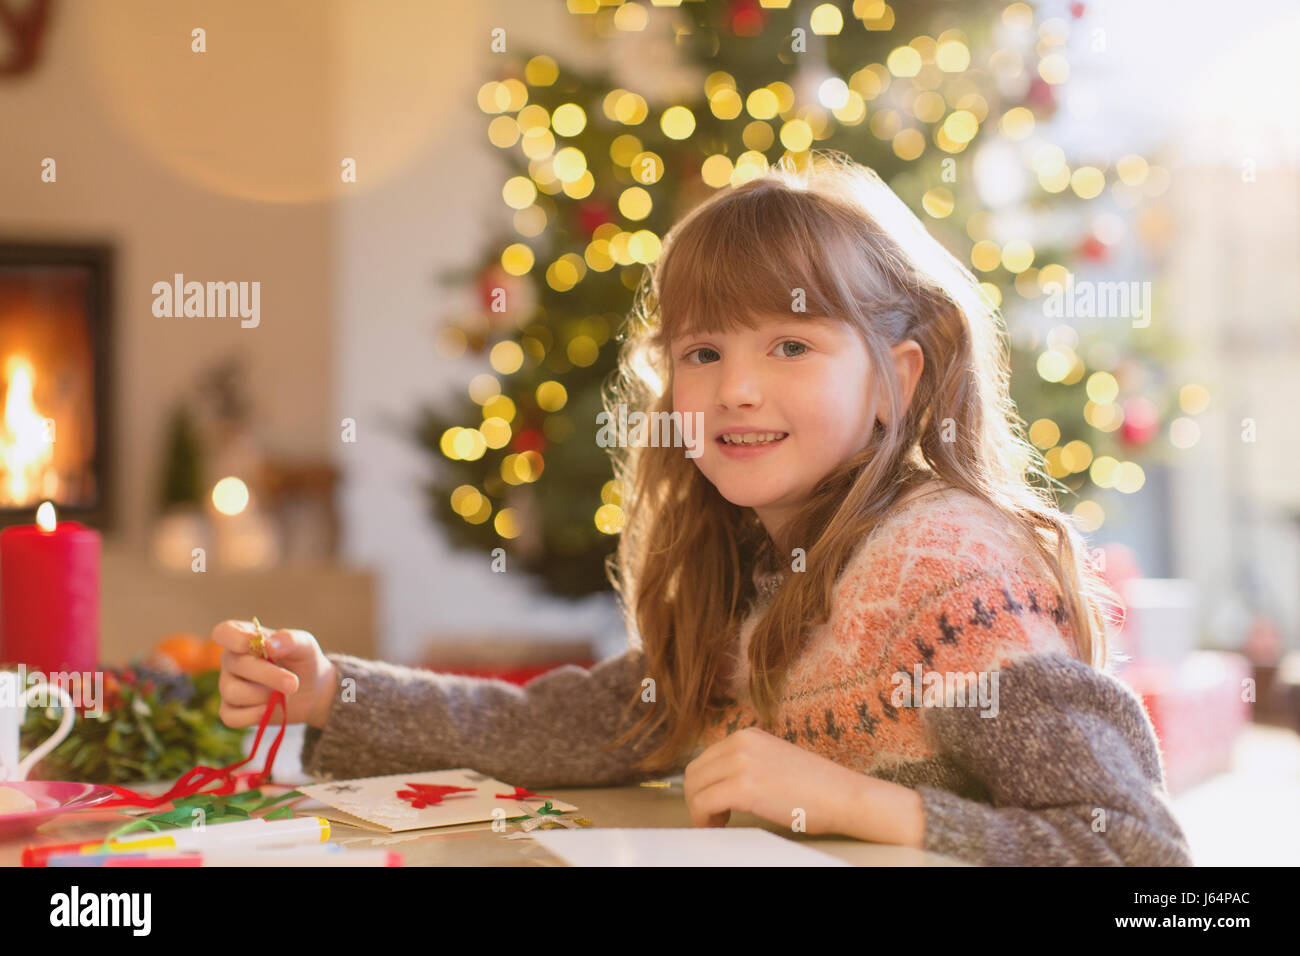 Portrait smiling girl making Christmas decorations Stock Photo